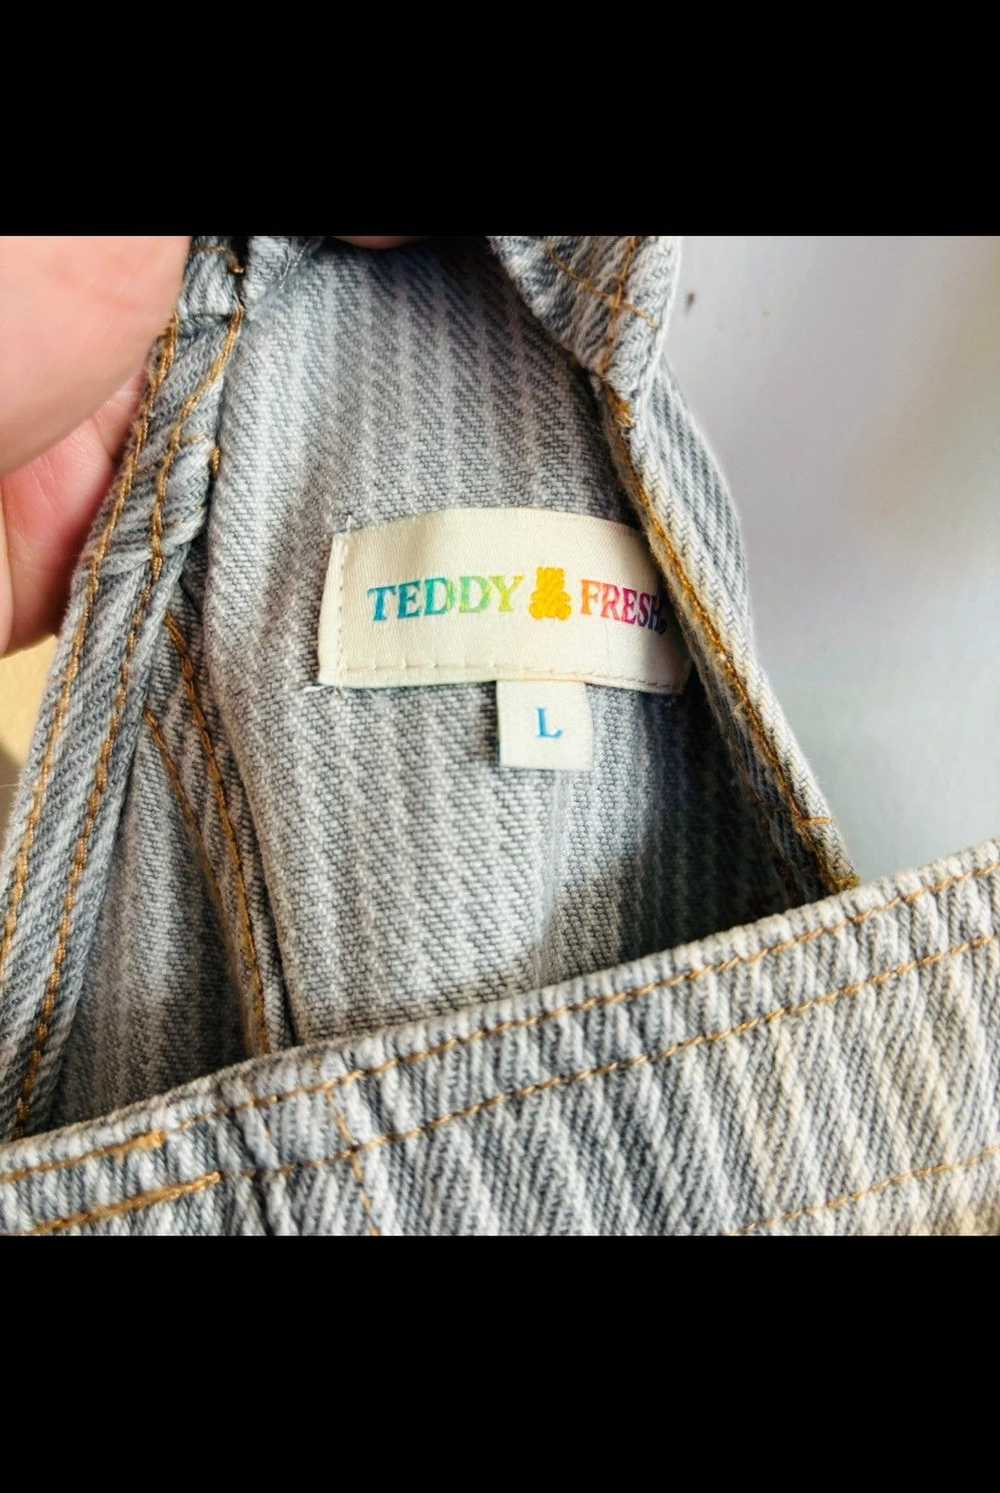 Teddy Fresh Teddy Fresh Women's Overalls - Large - image 5